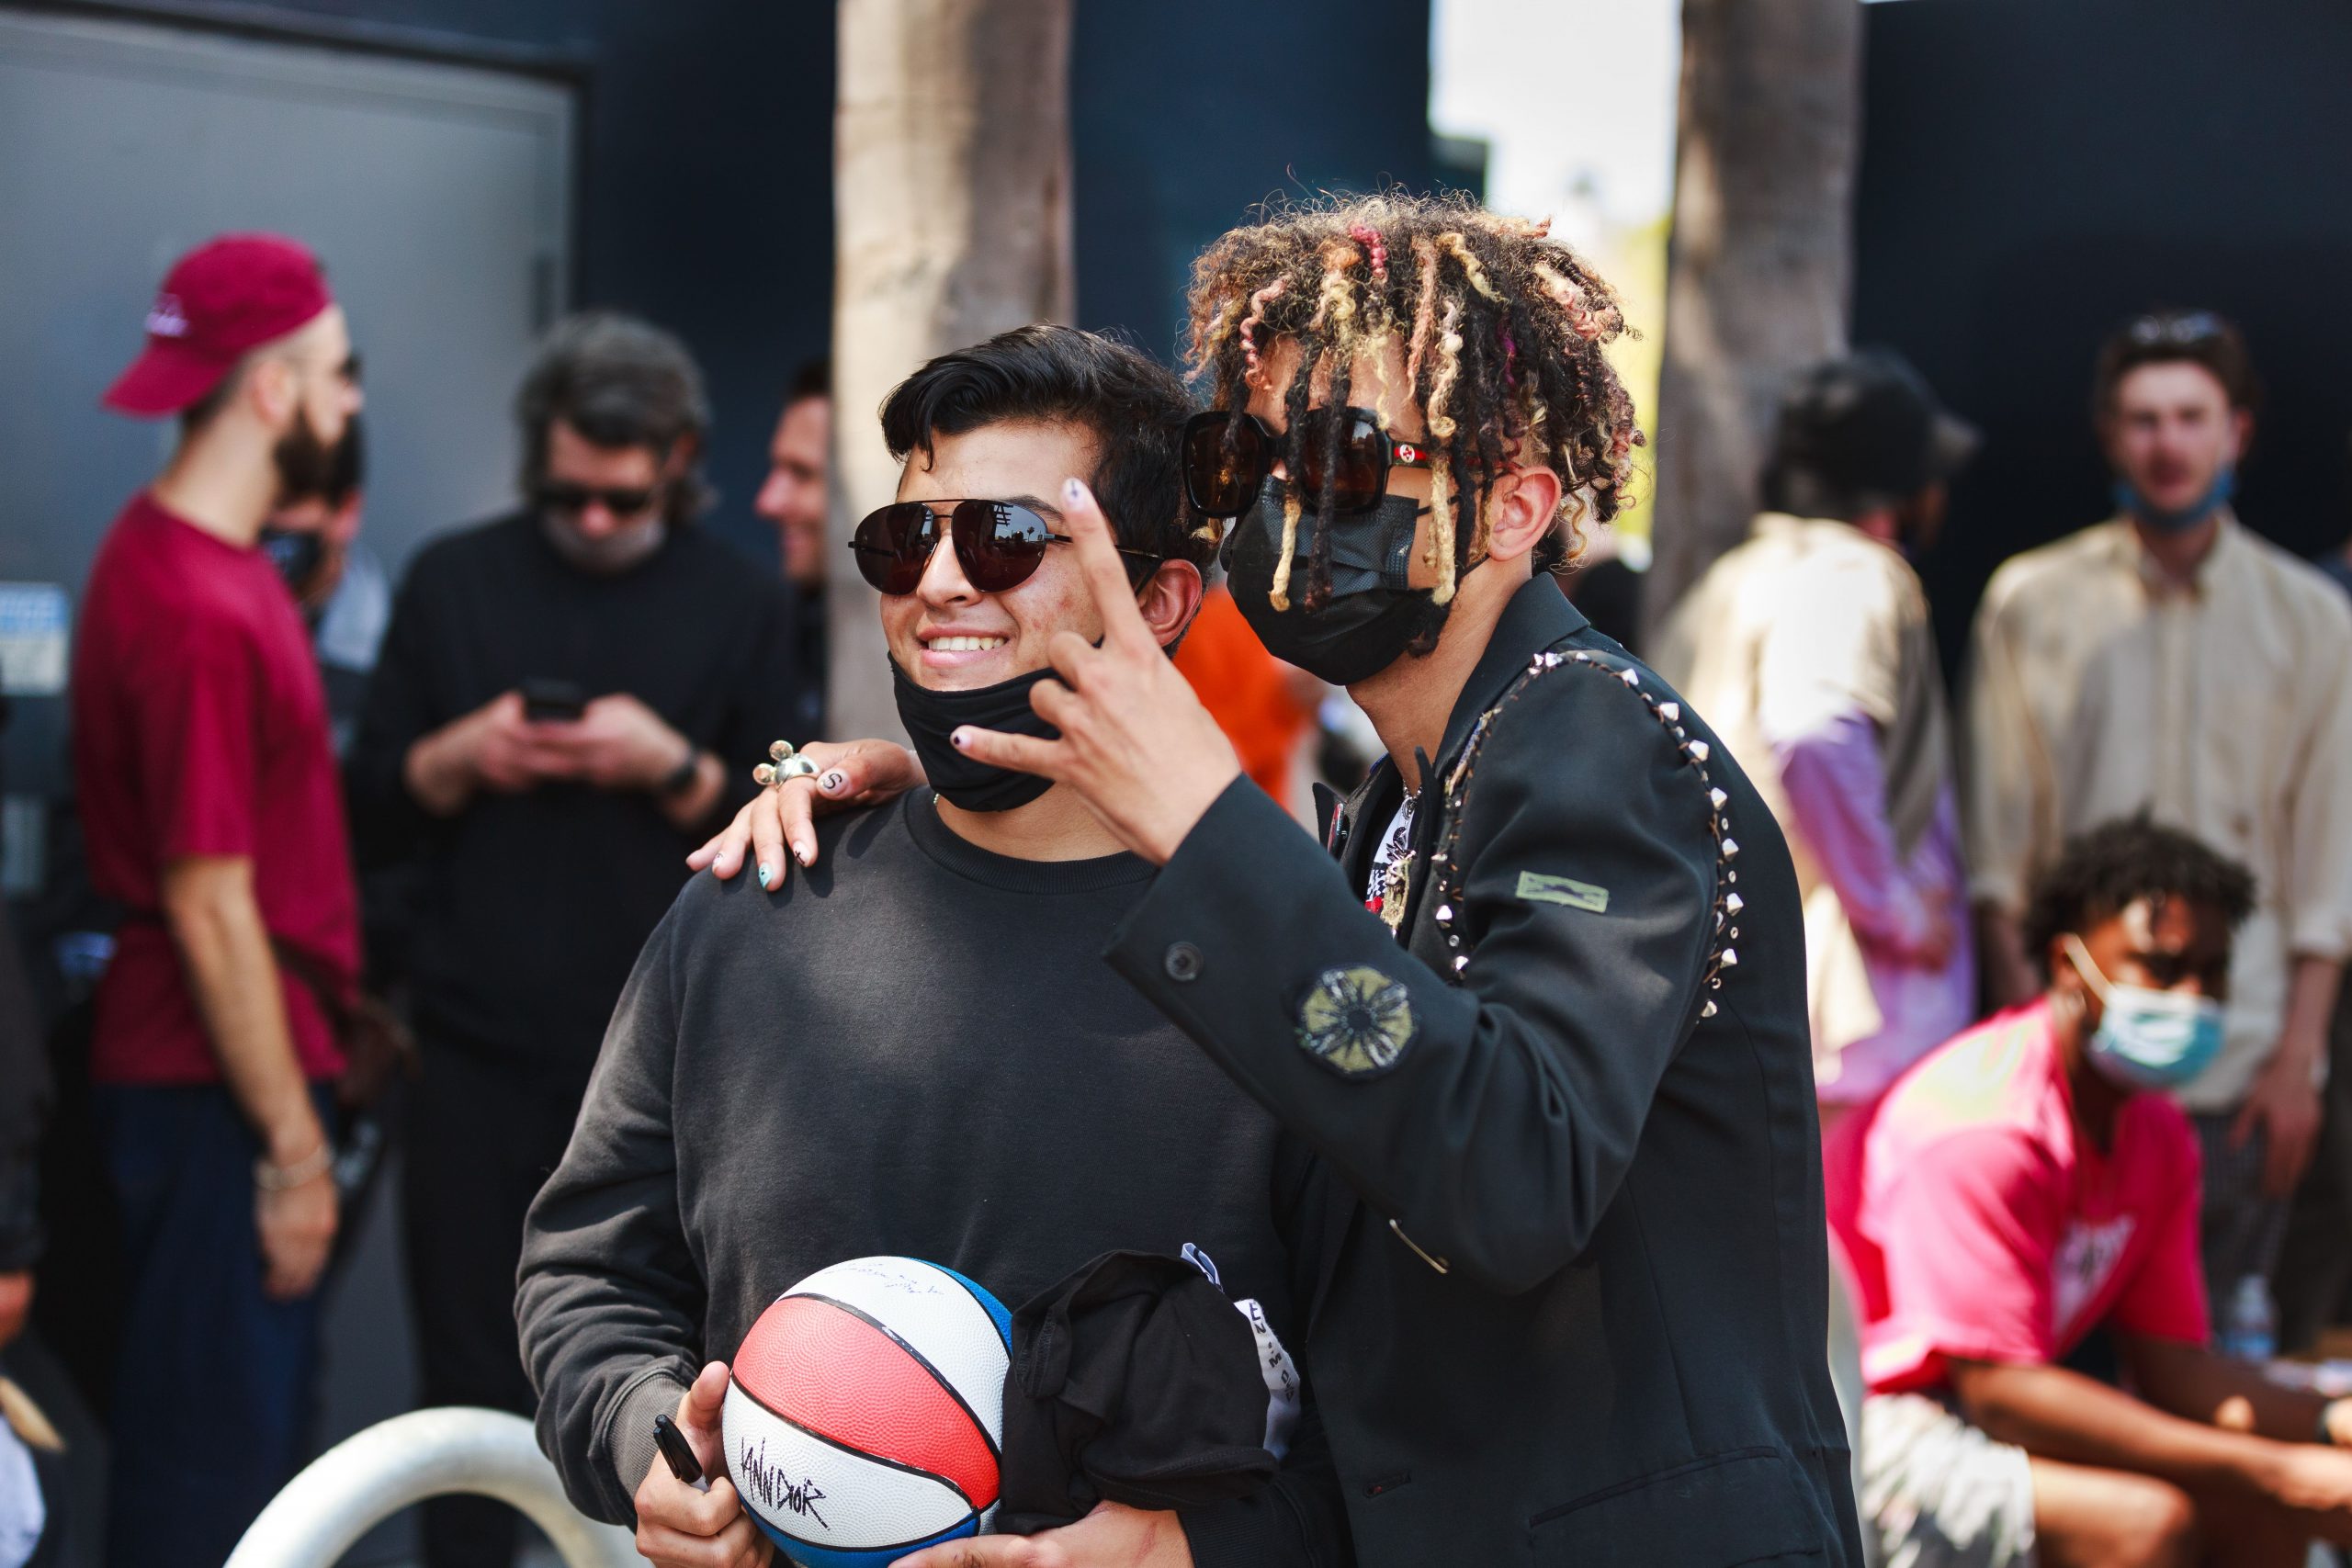 Iann Dior Meeting A Fan At Brand PromotIon in LA